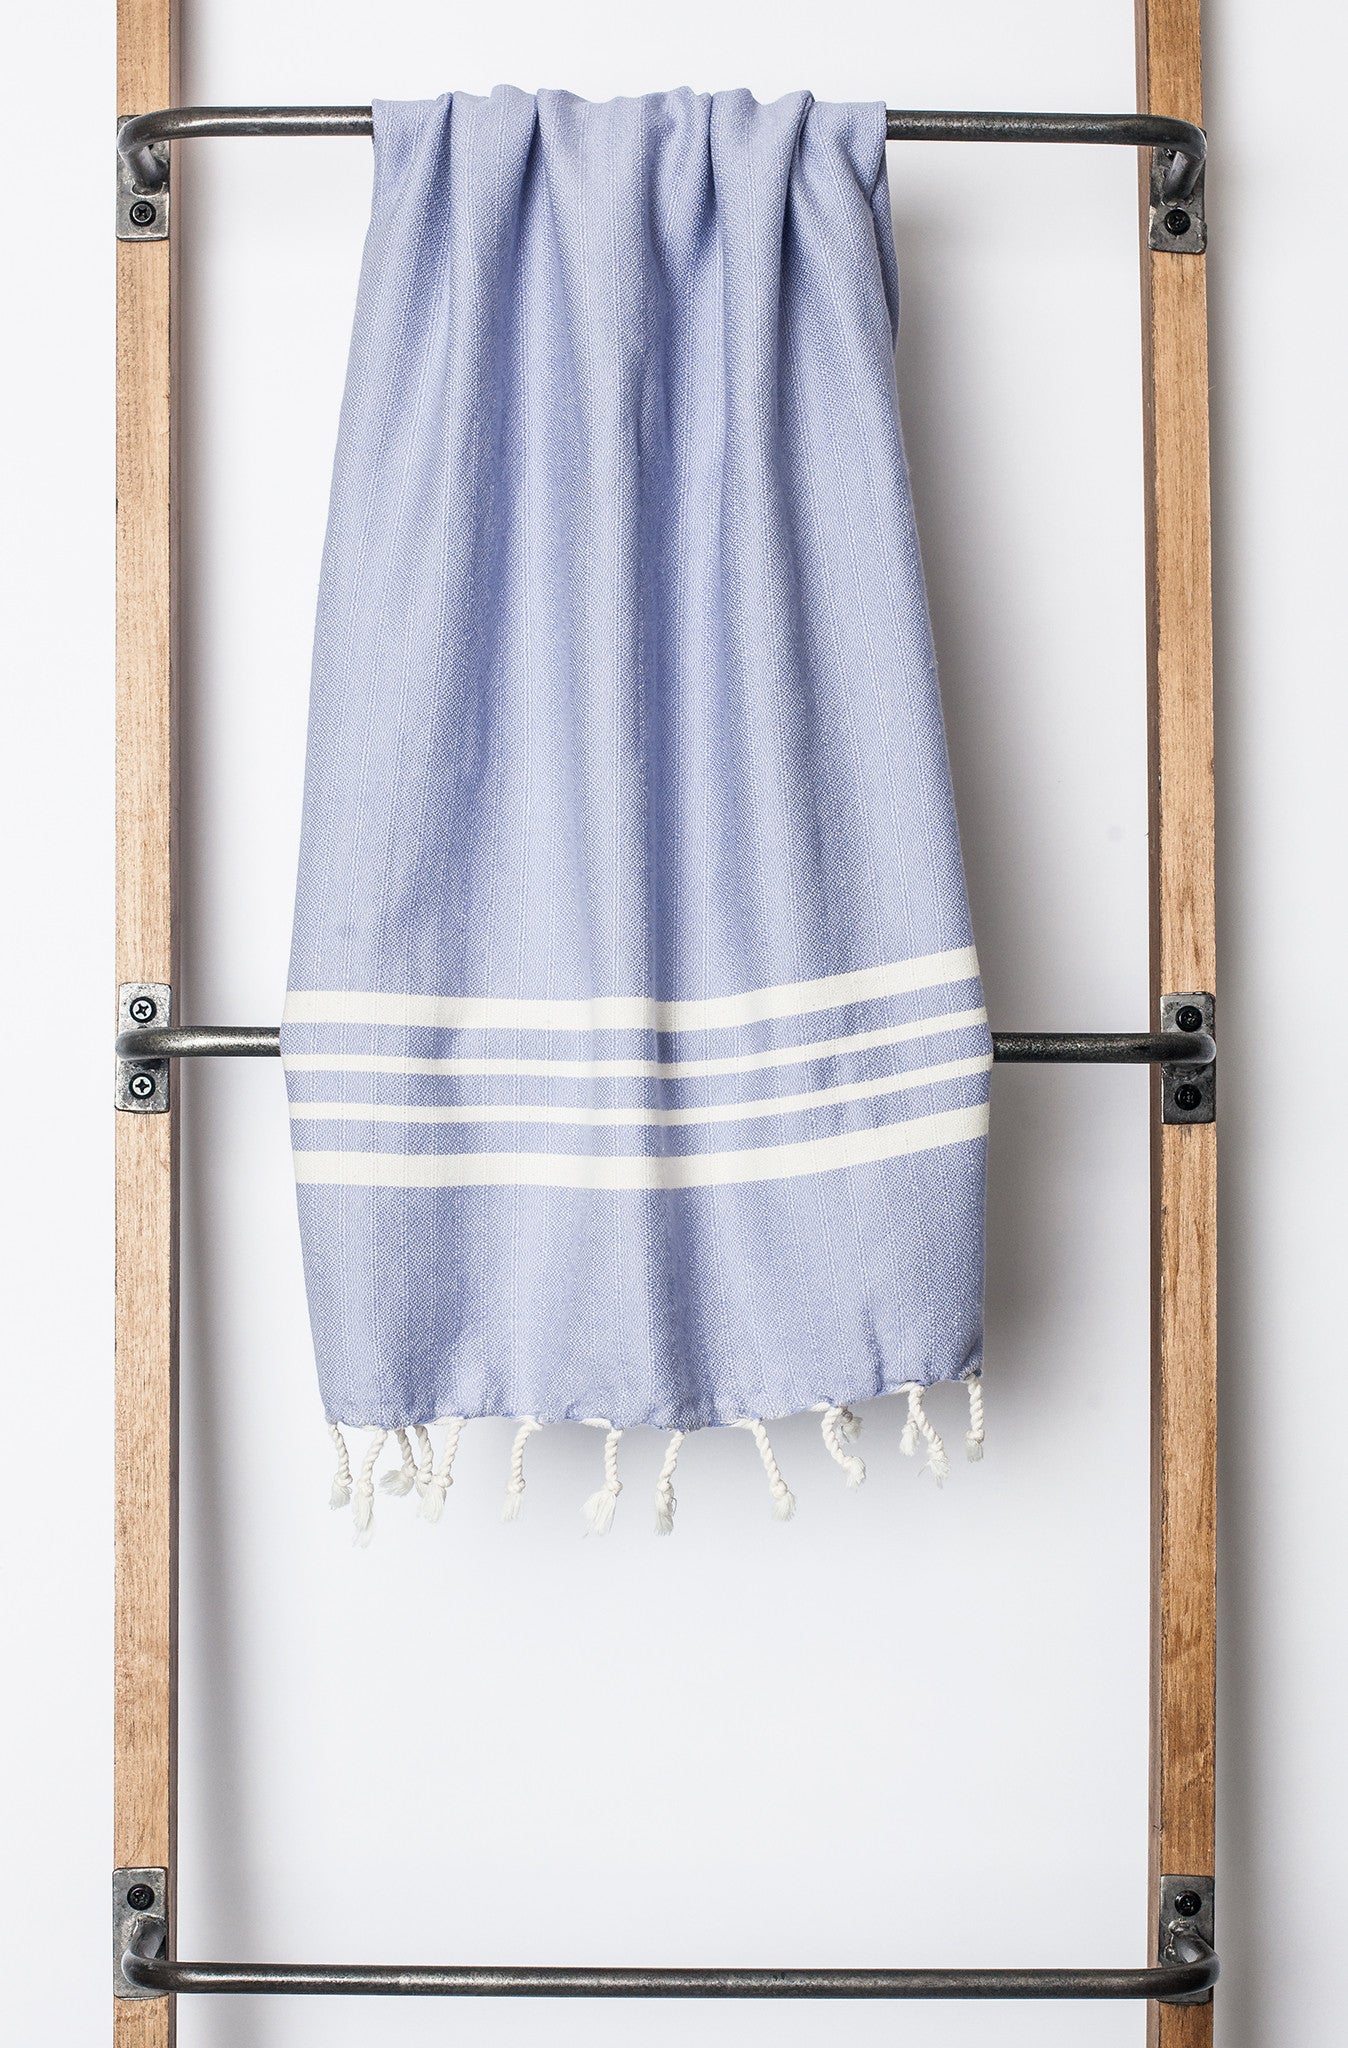 Towel Aegean marmara imports Color Ecru Bath - Turkish Background